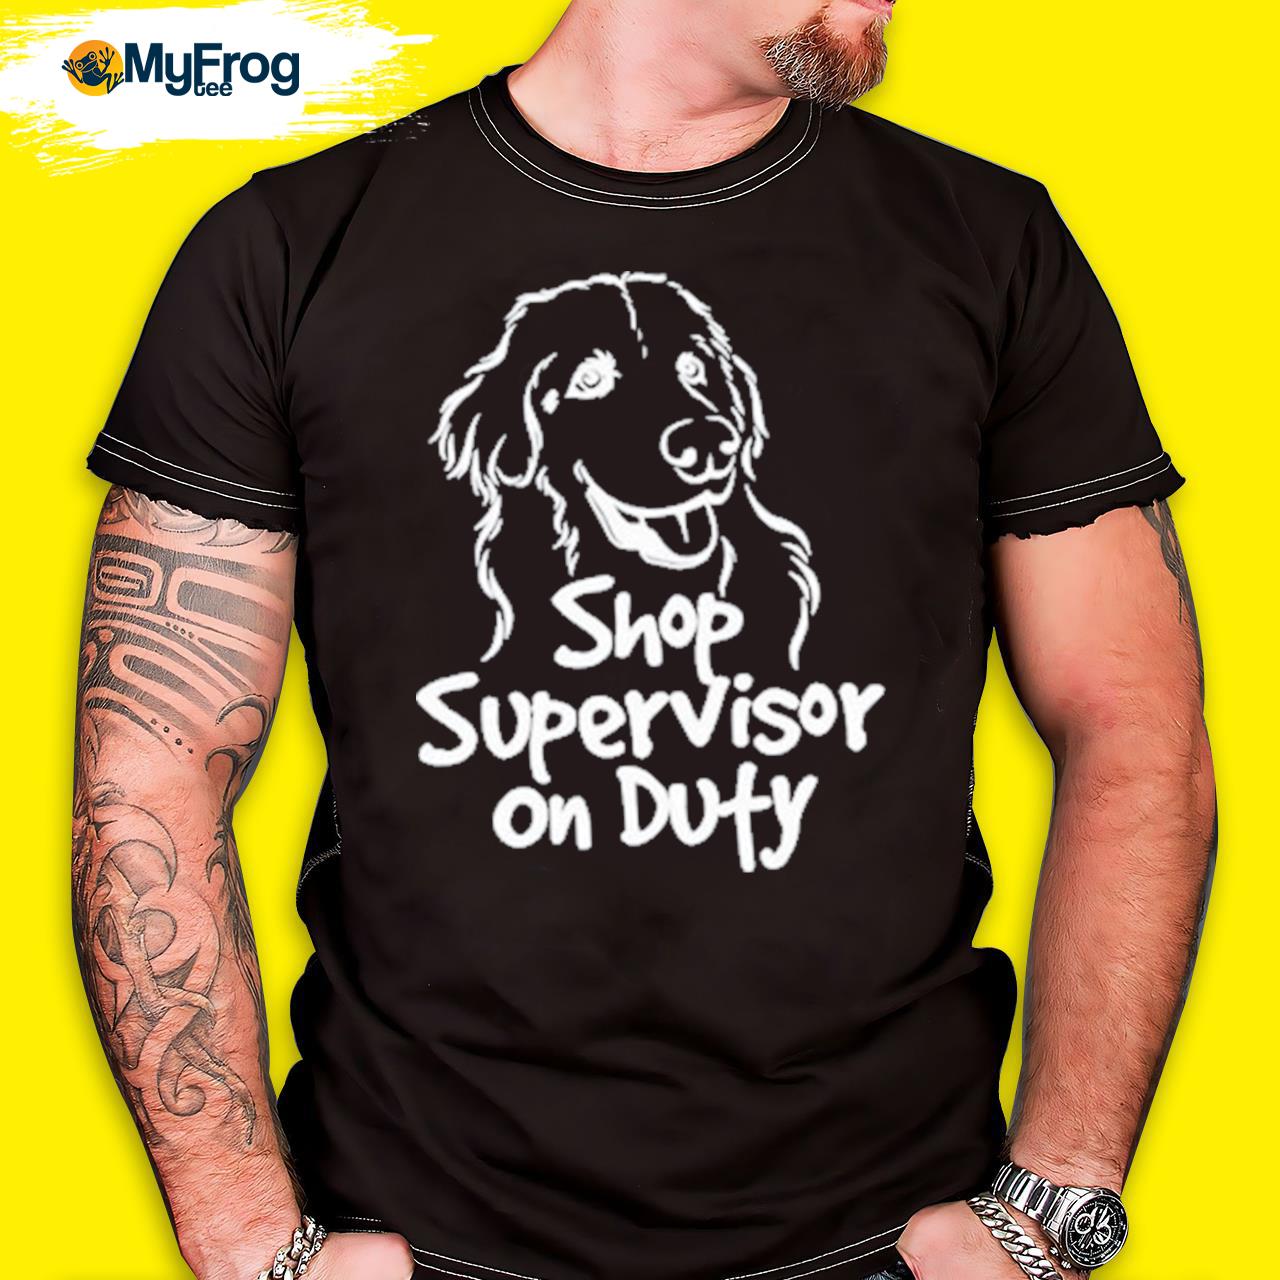 Shop Supervisoy On Duty shirt